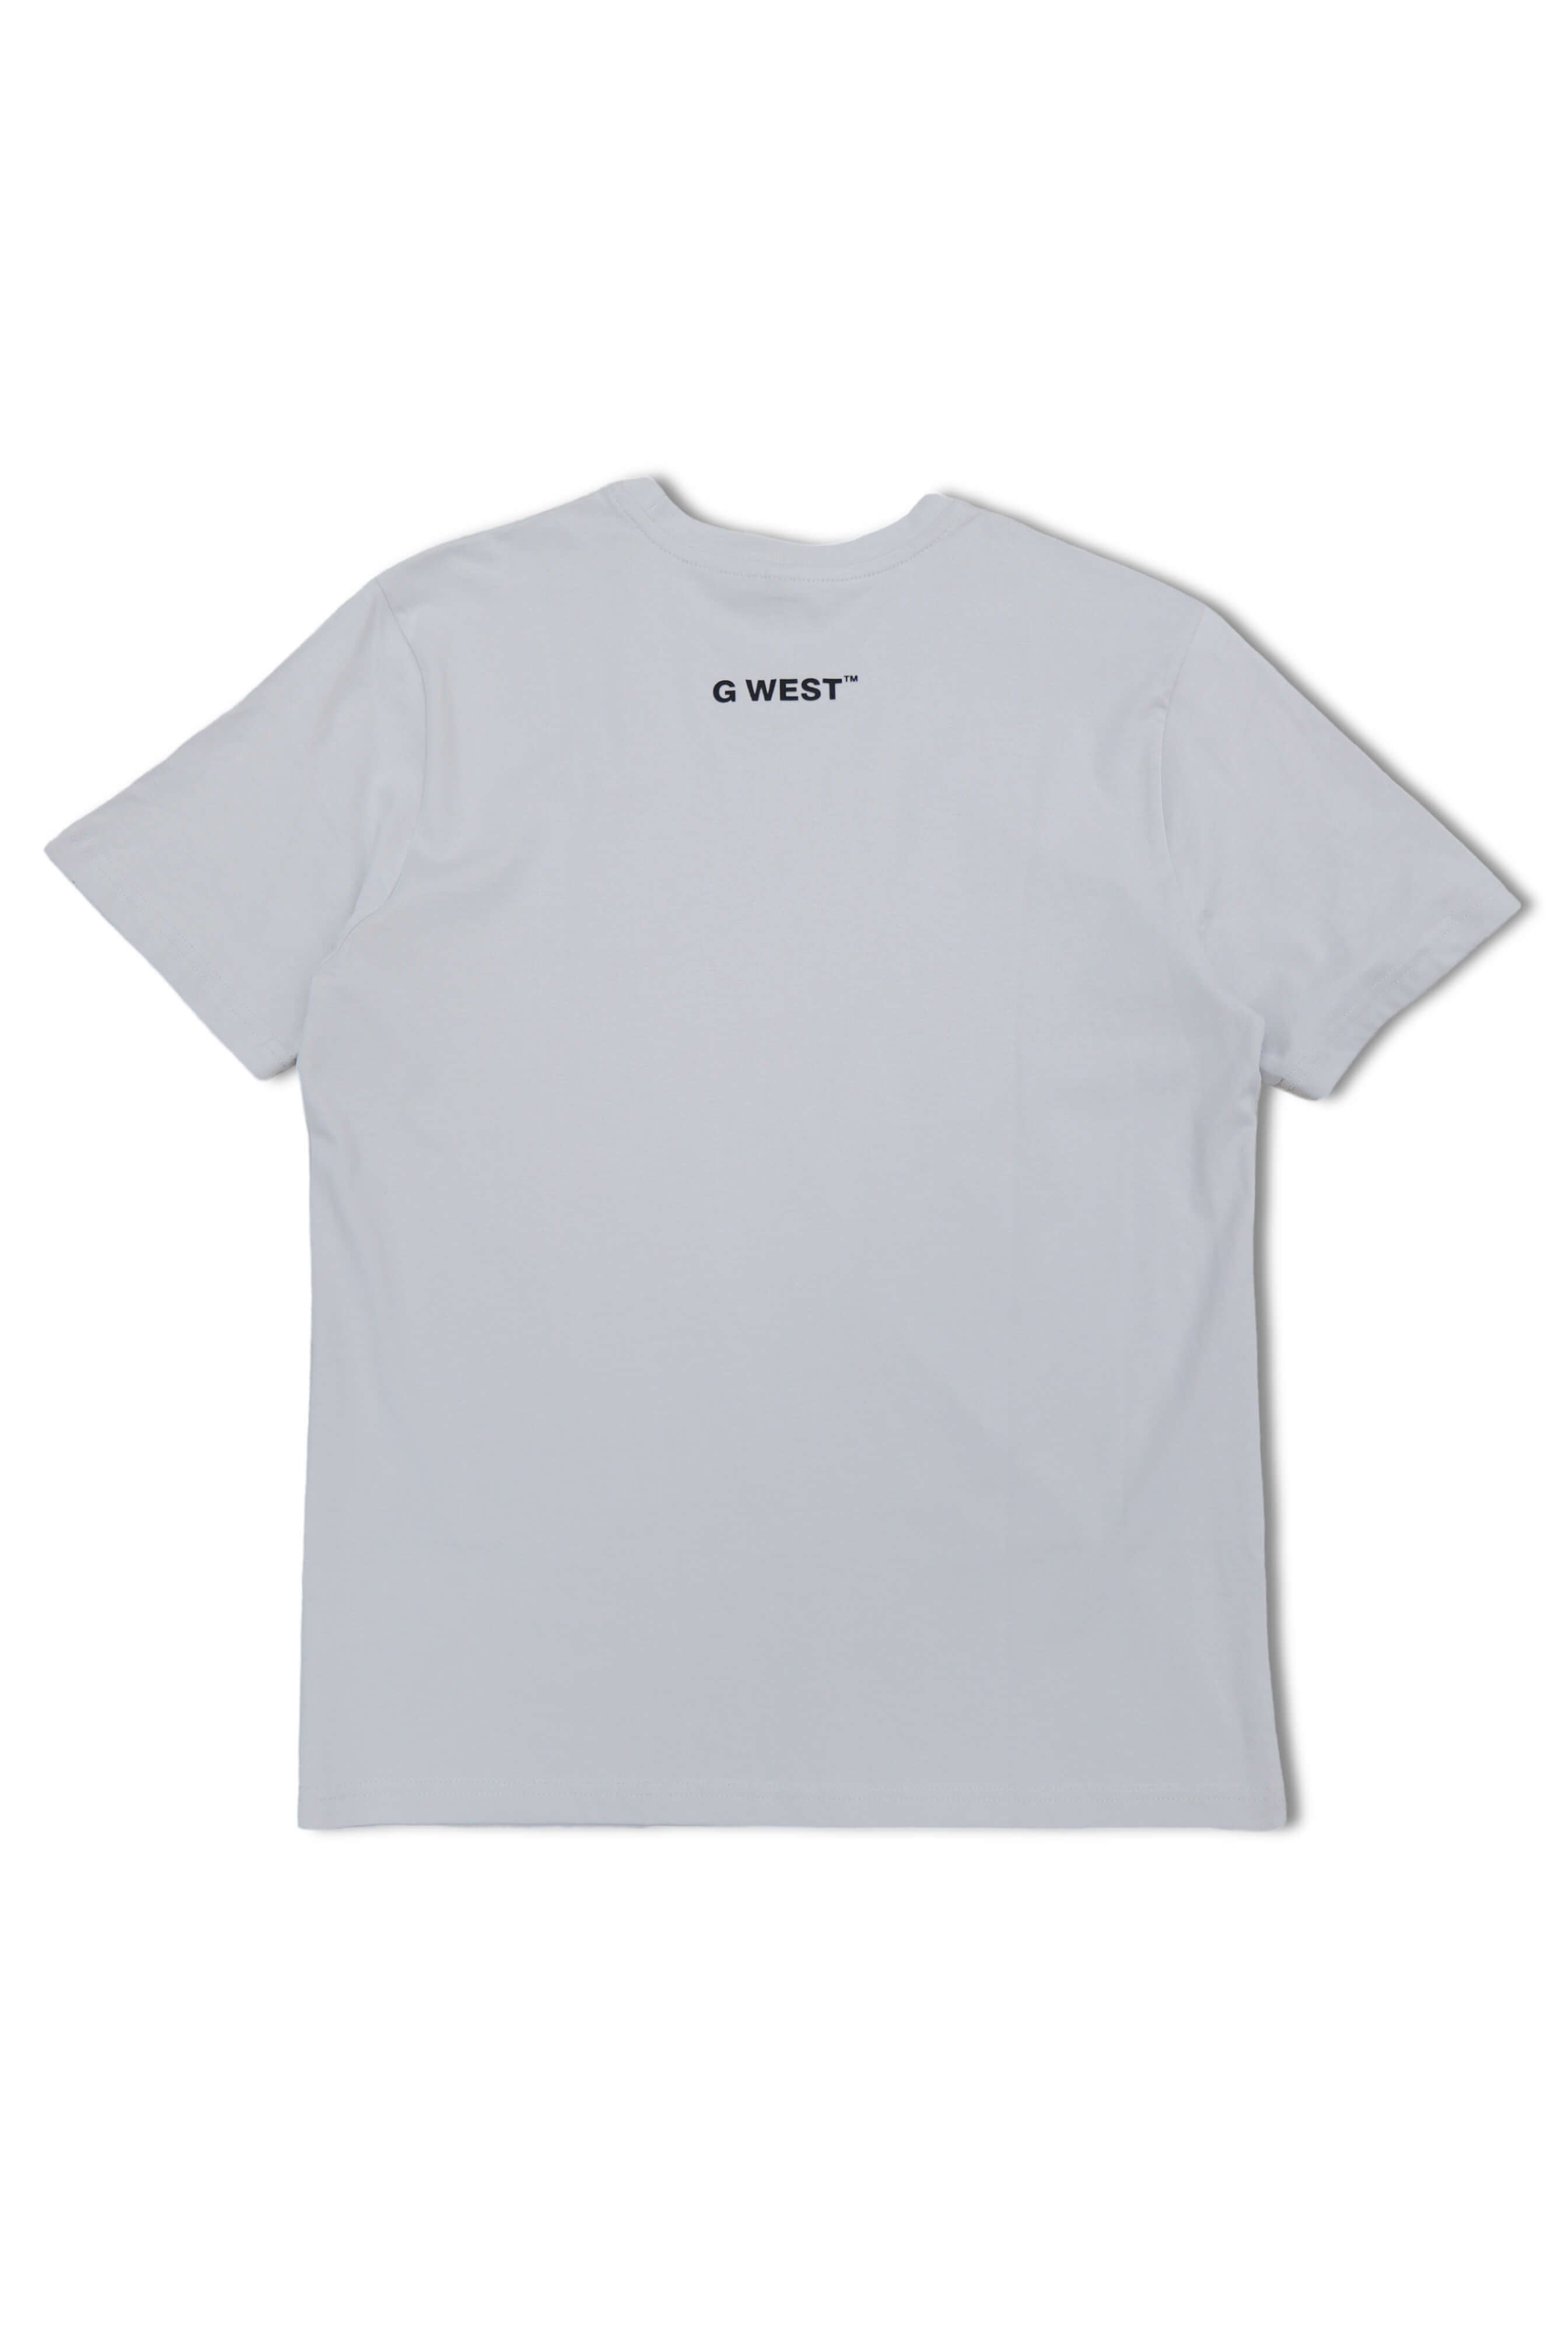 G West Big Mam Gorrila T-shirt - White